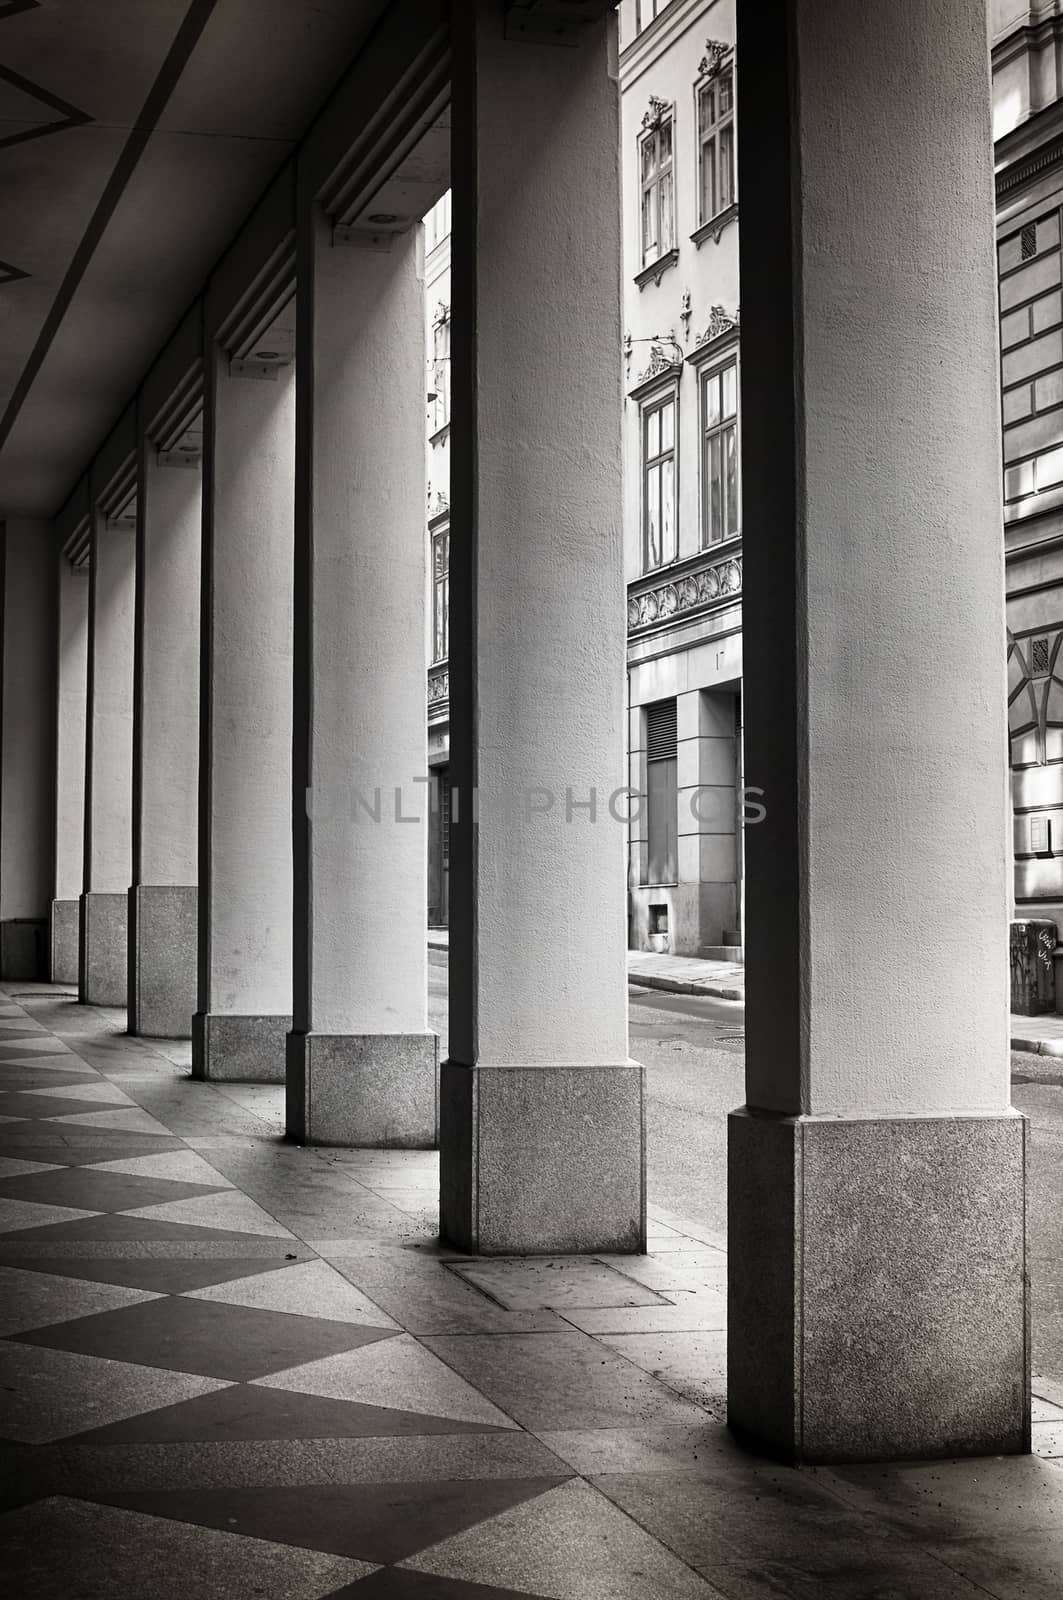 Symmetrical corridor of pillars next to a street.